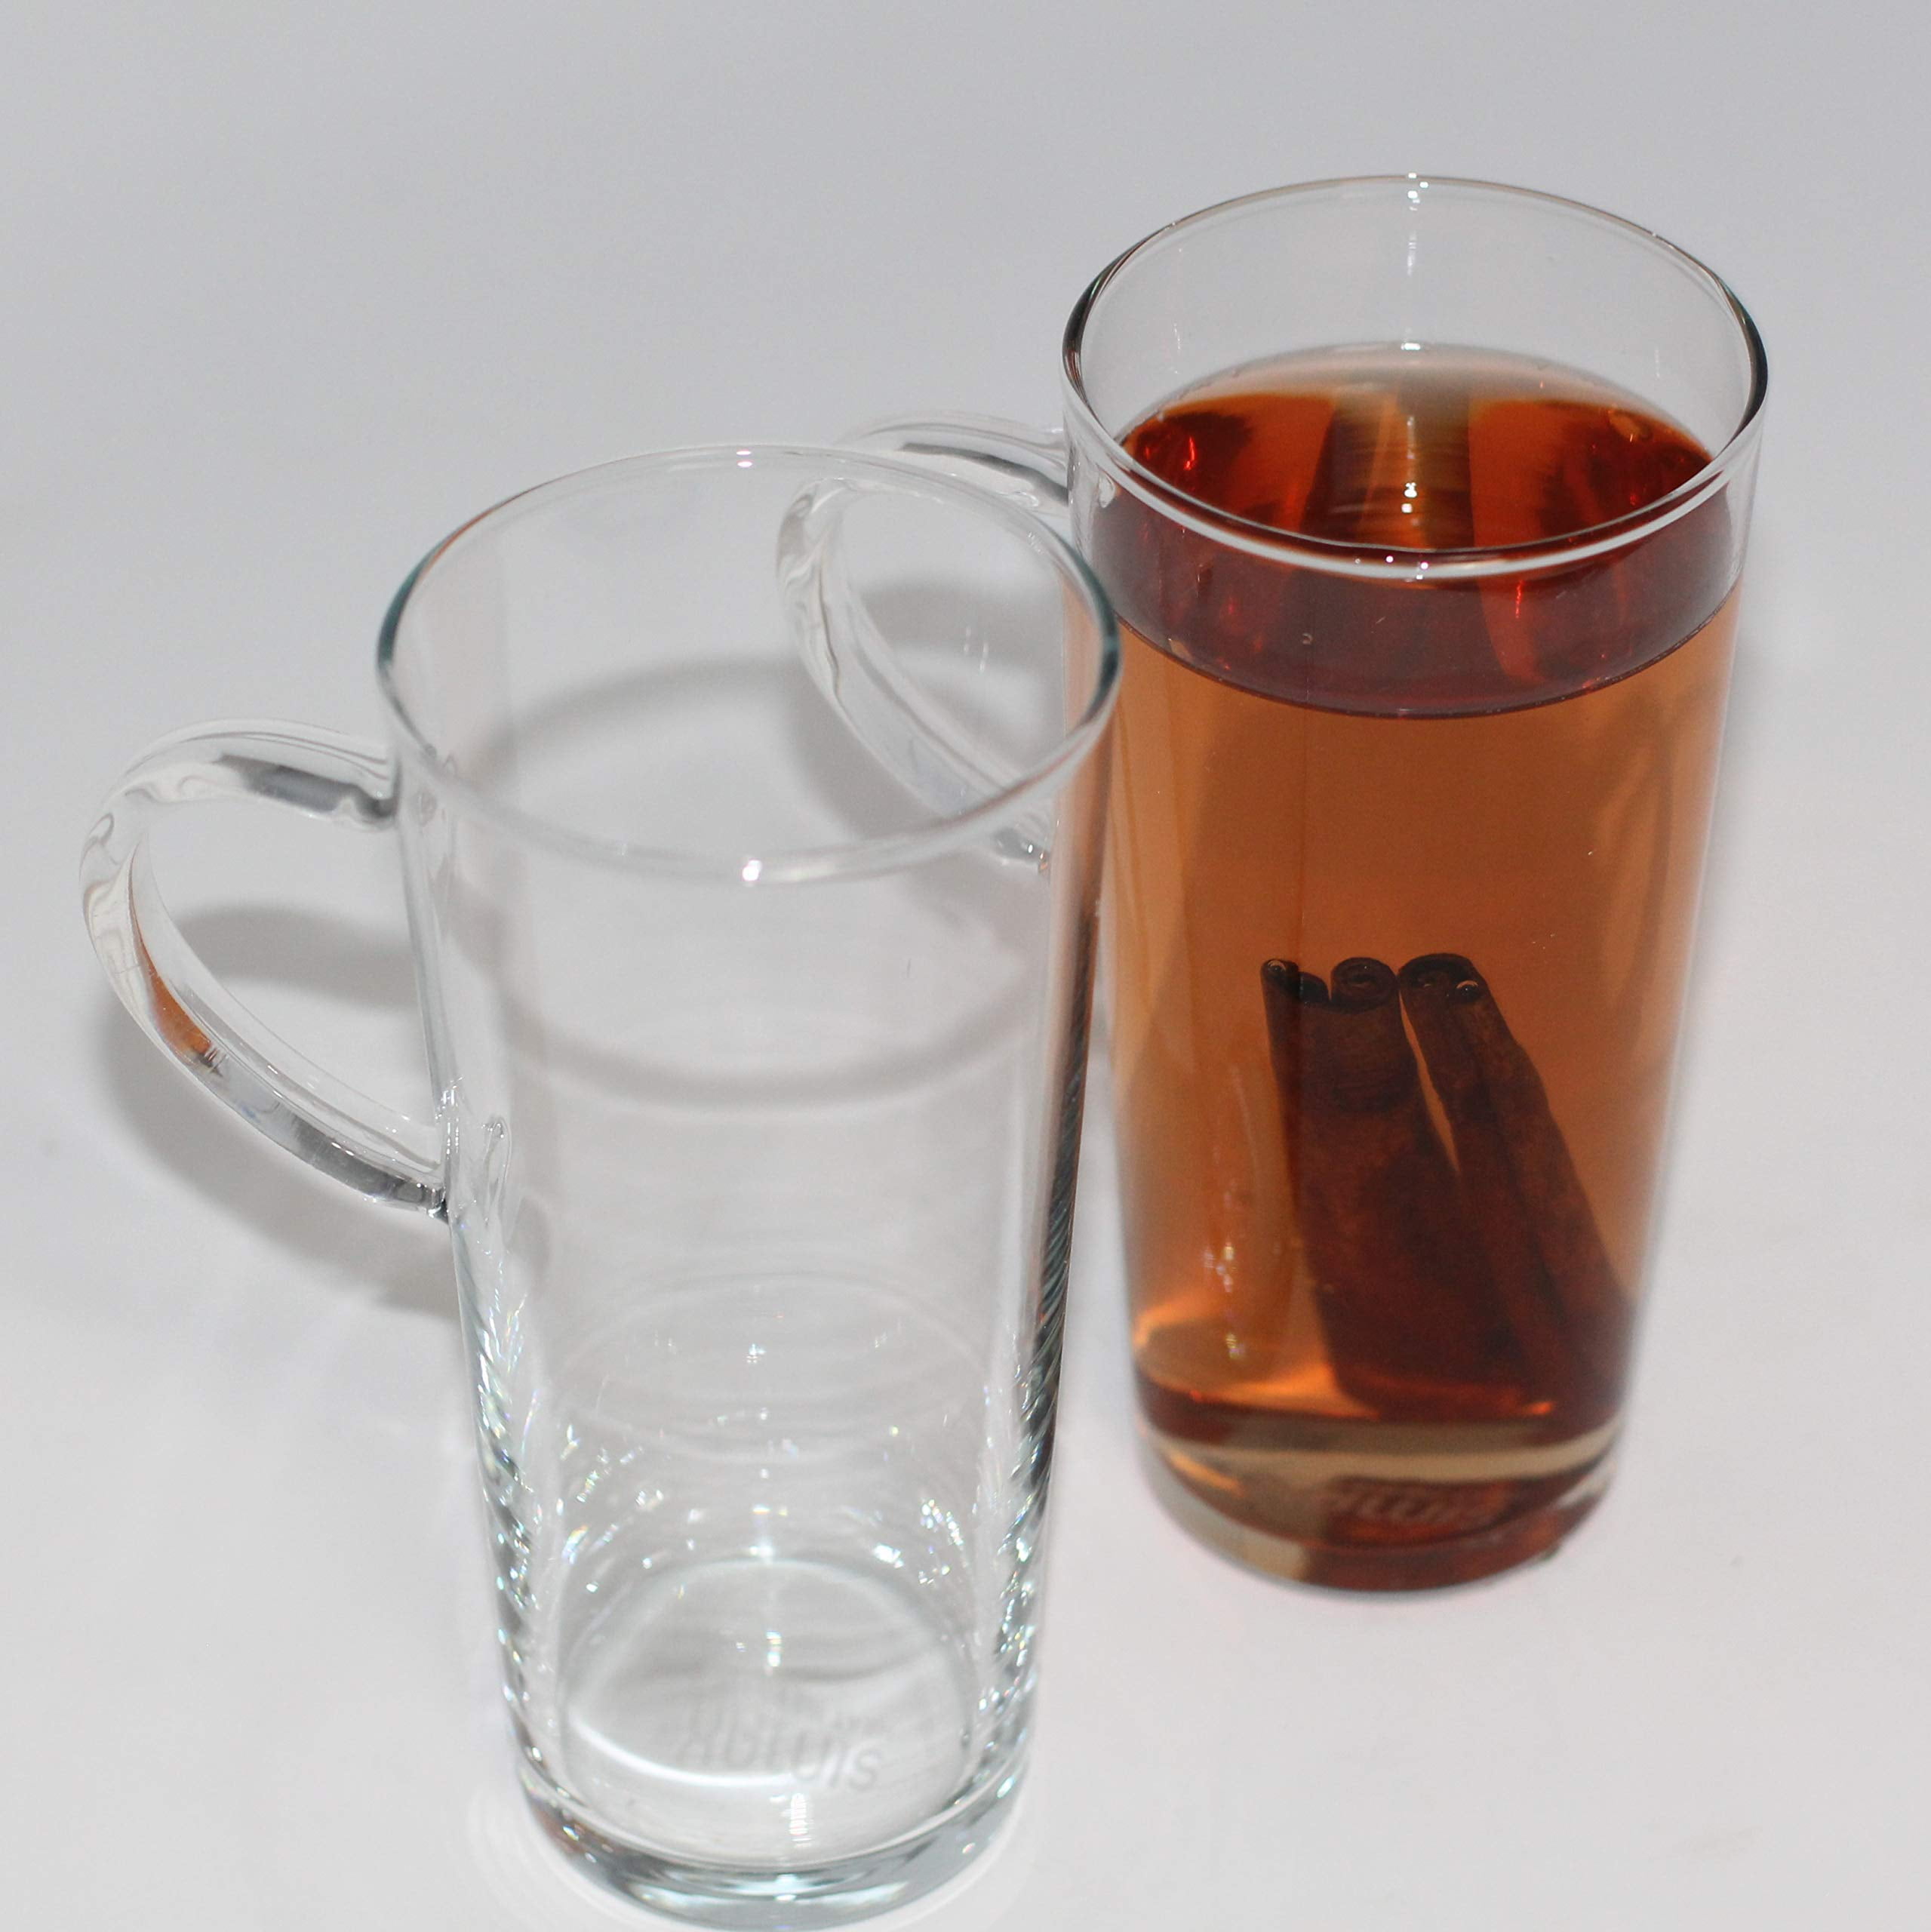 Simax glass coffee Mugs, 135 Oz Borosilicate glass Mugs for Hot